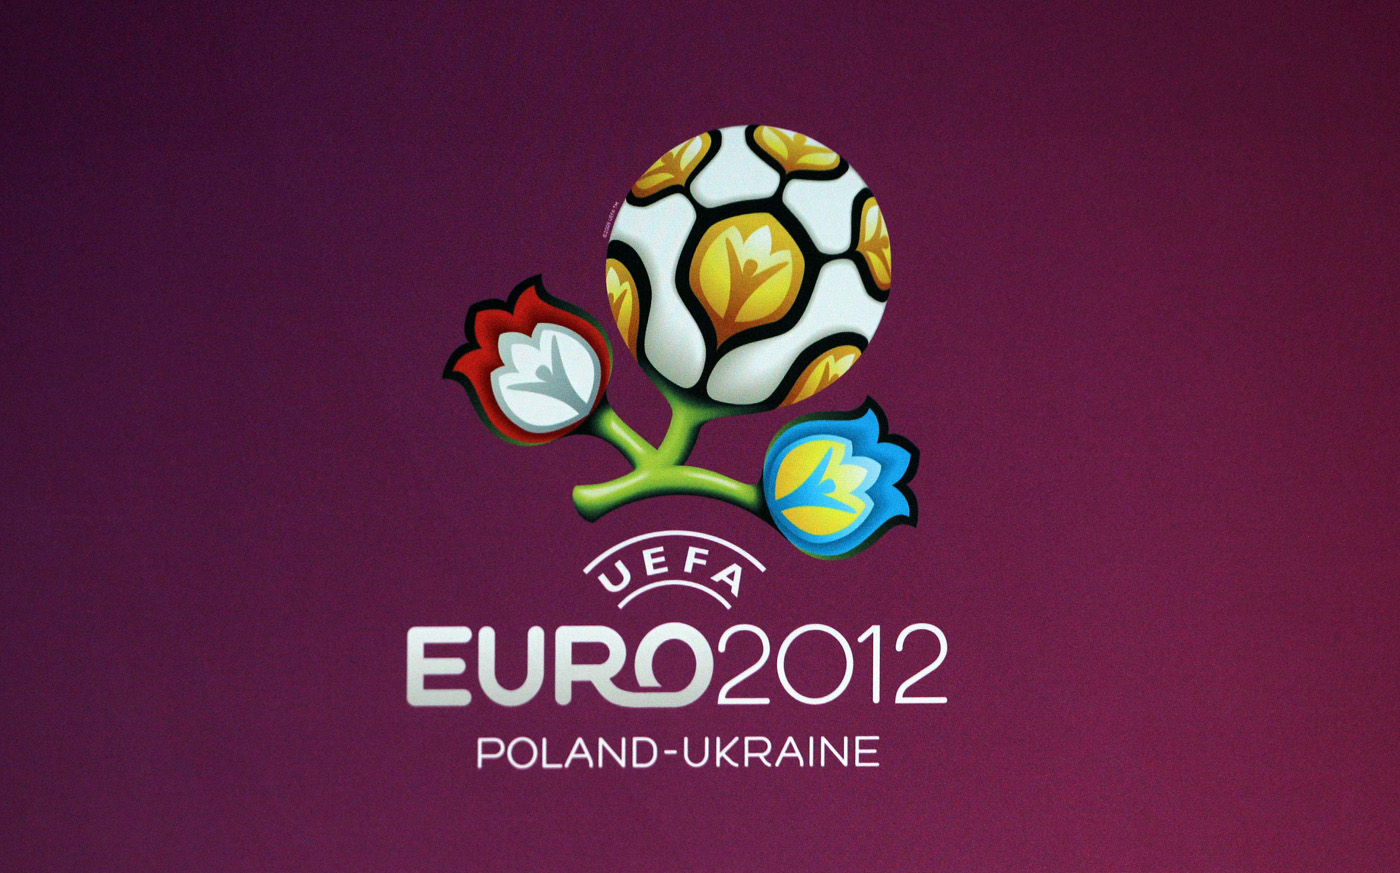 L'euro 2012 Poland Ukraine